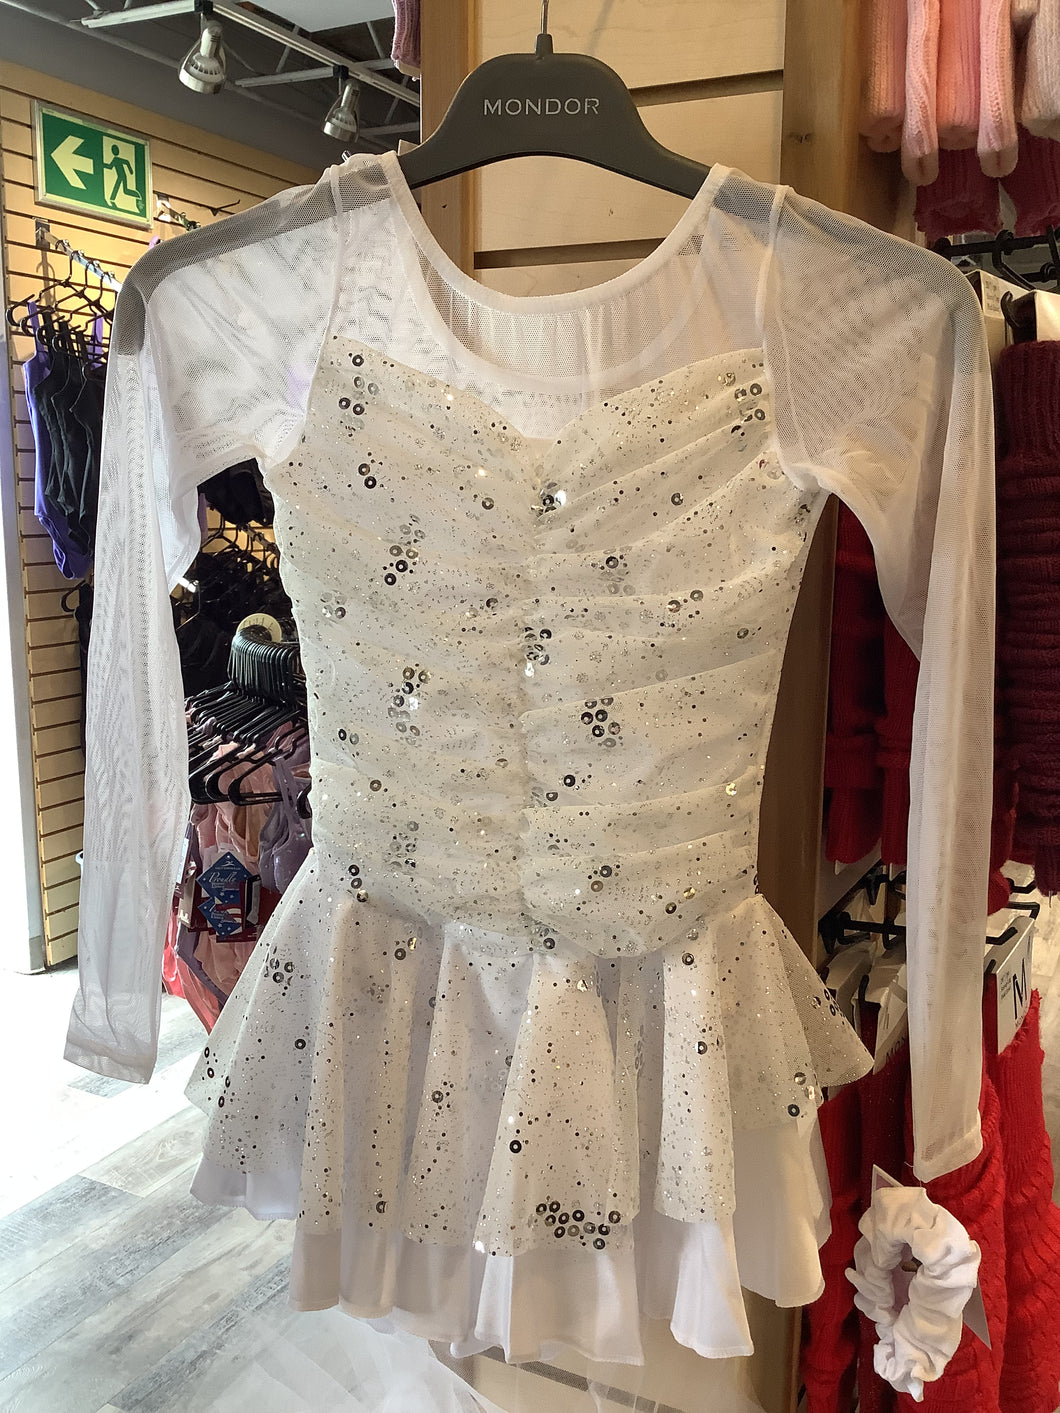 Mondor 613 Mesh-Covered Skating Dress